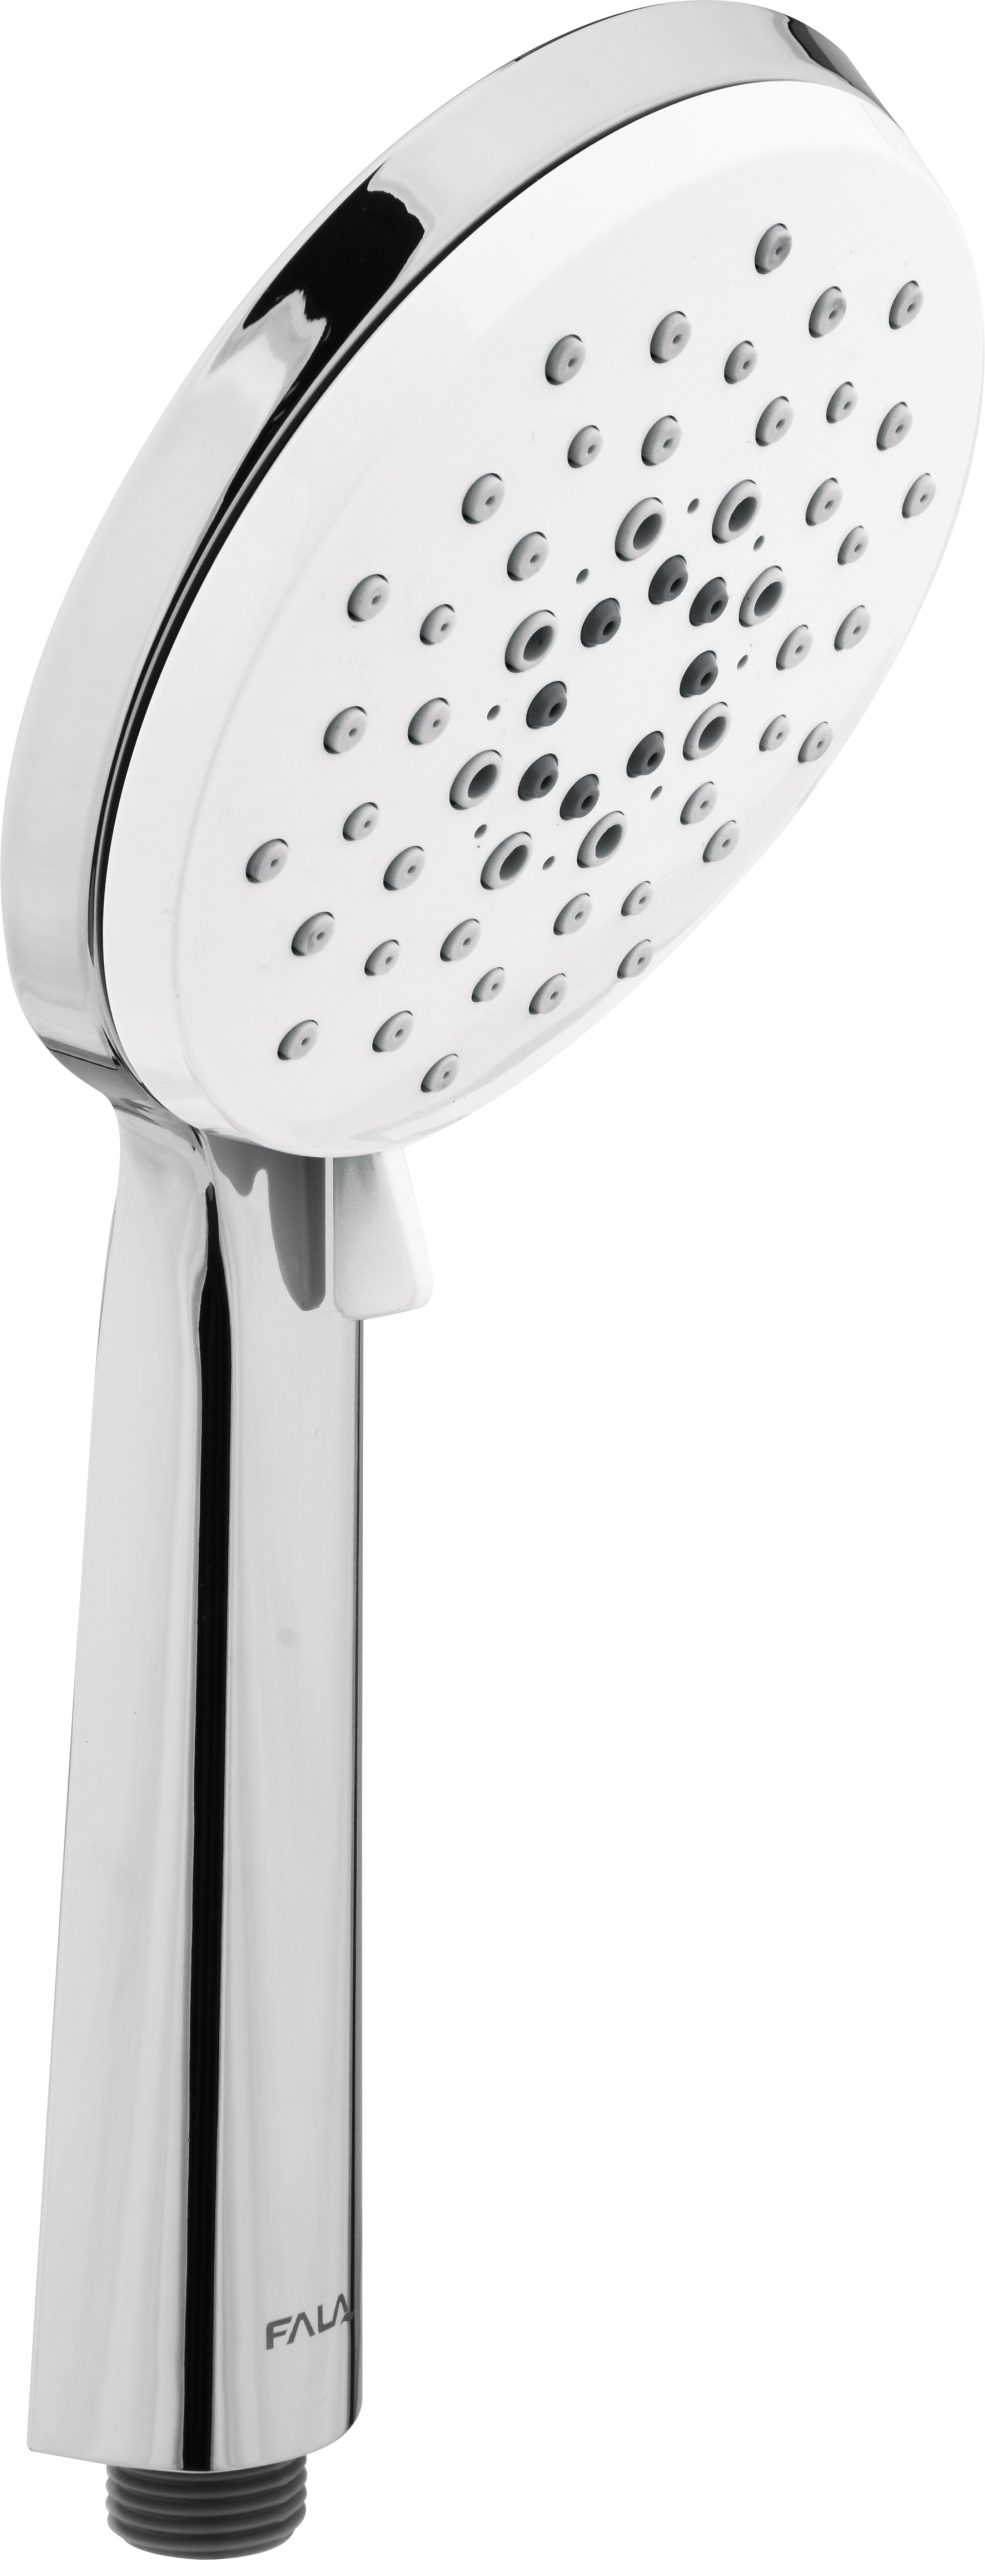 Zuhanyfej WHITE MOON zuhanyfej 3 funkcióval - 120mm